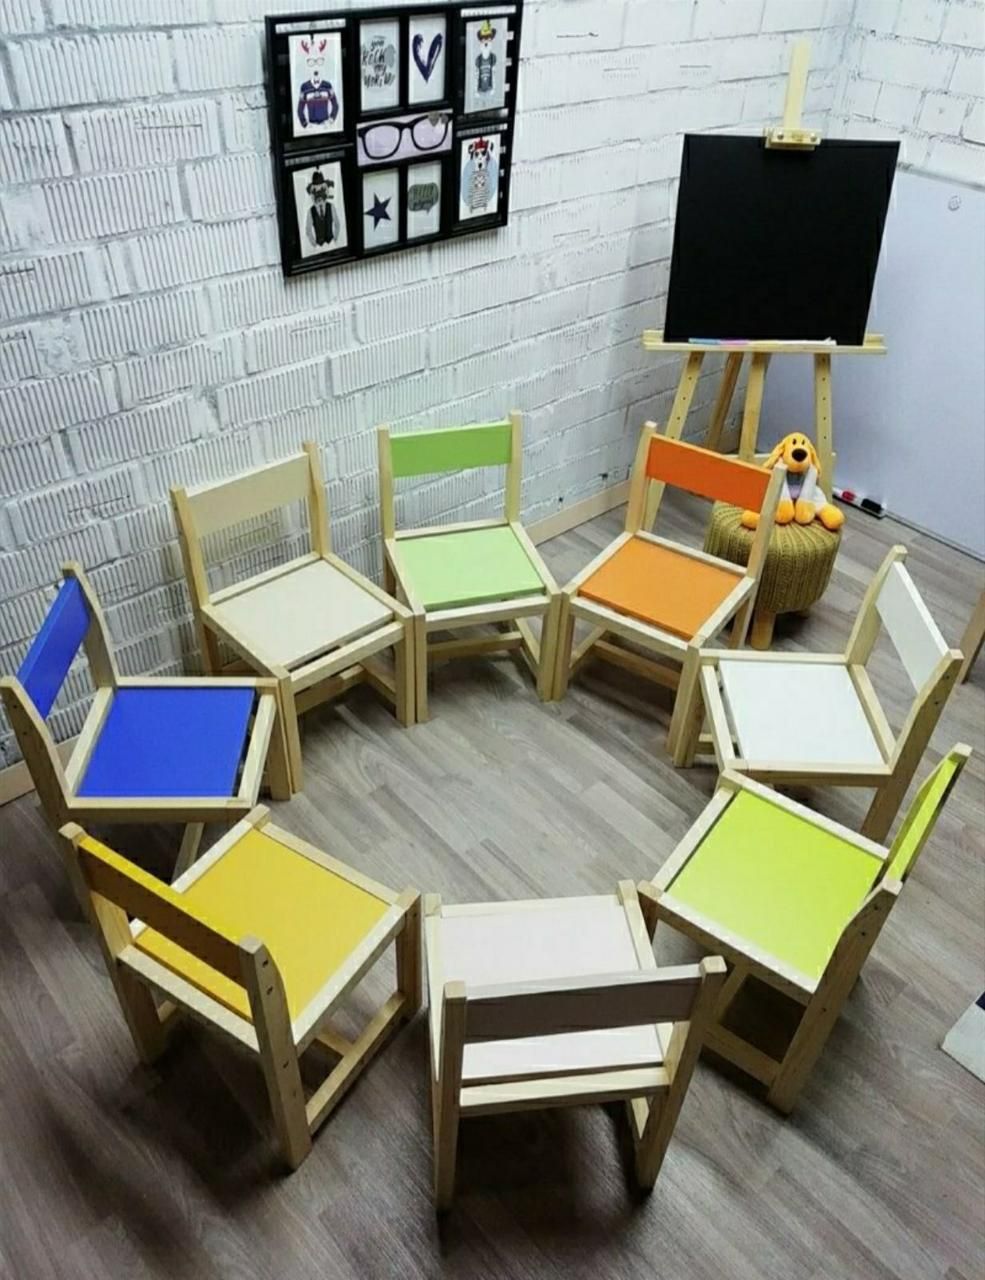 Детский стол-мольберт синий и 1 стул